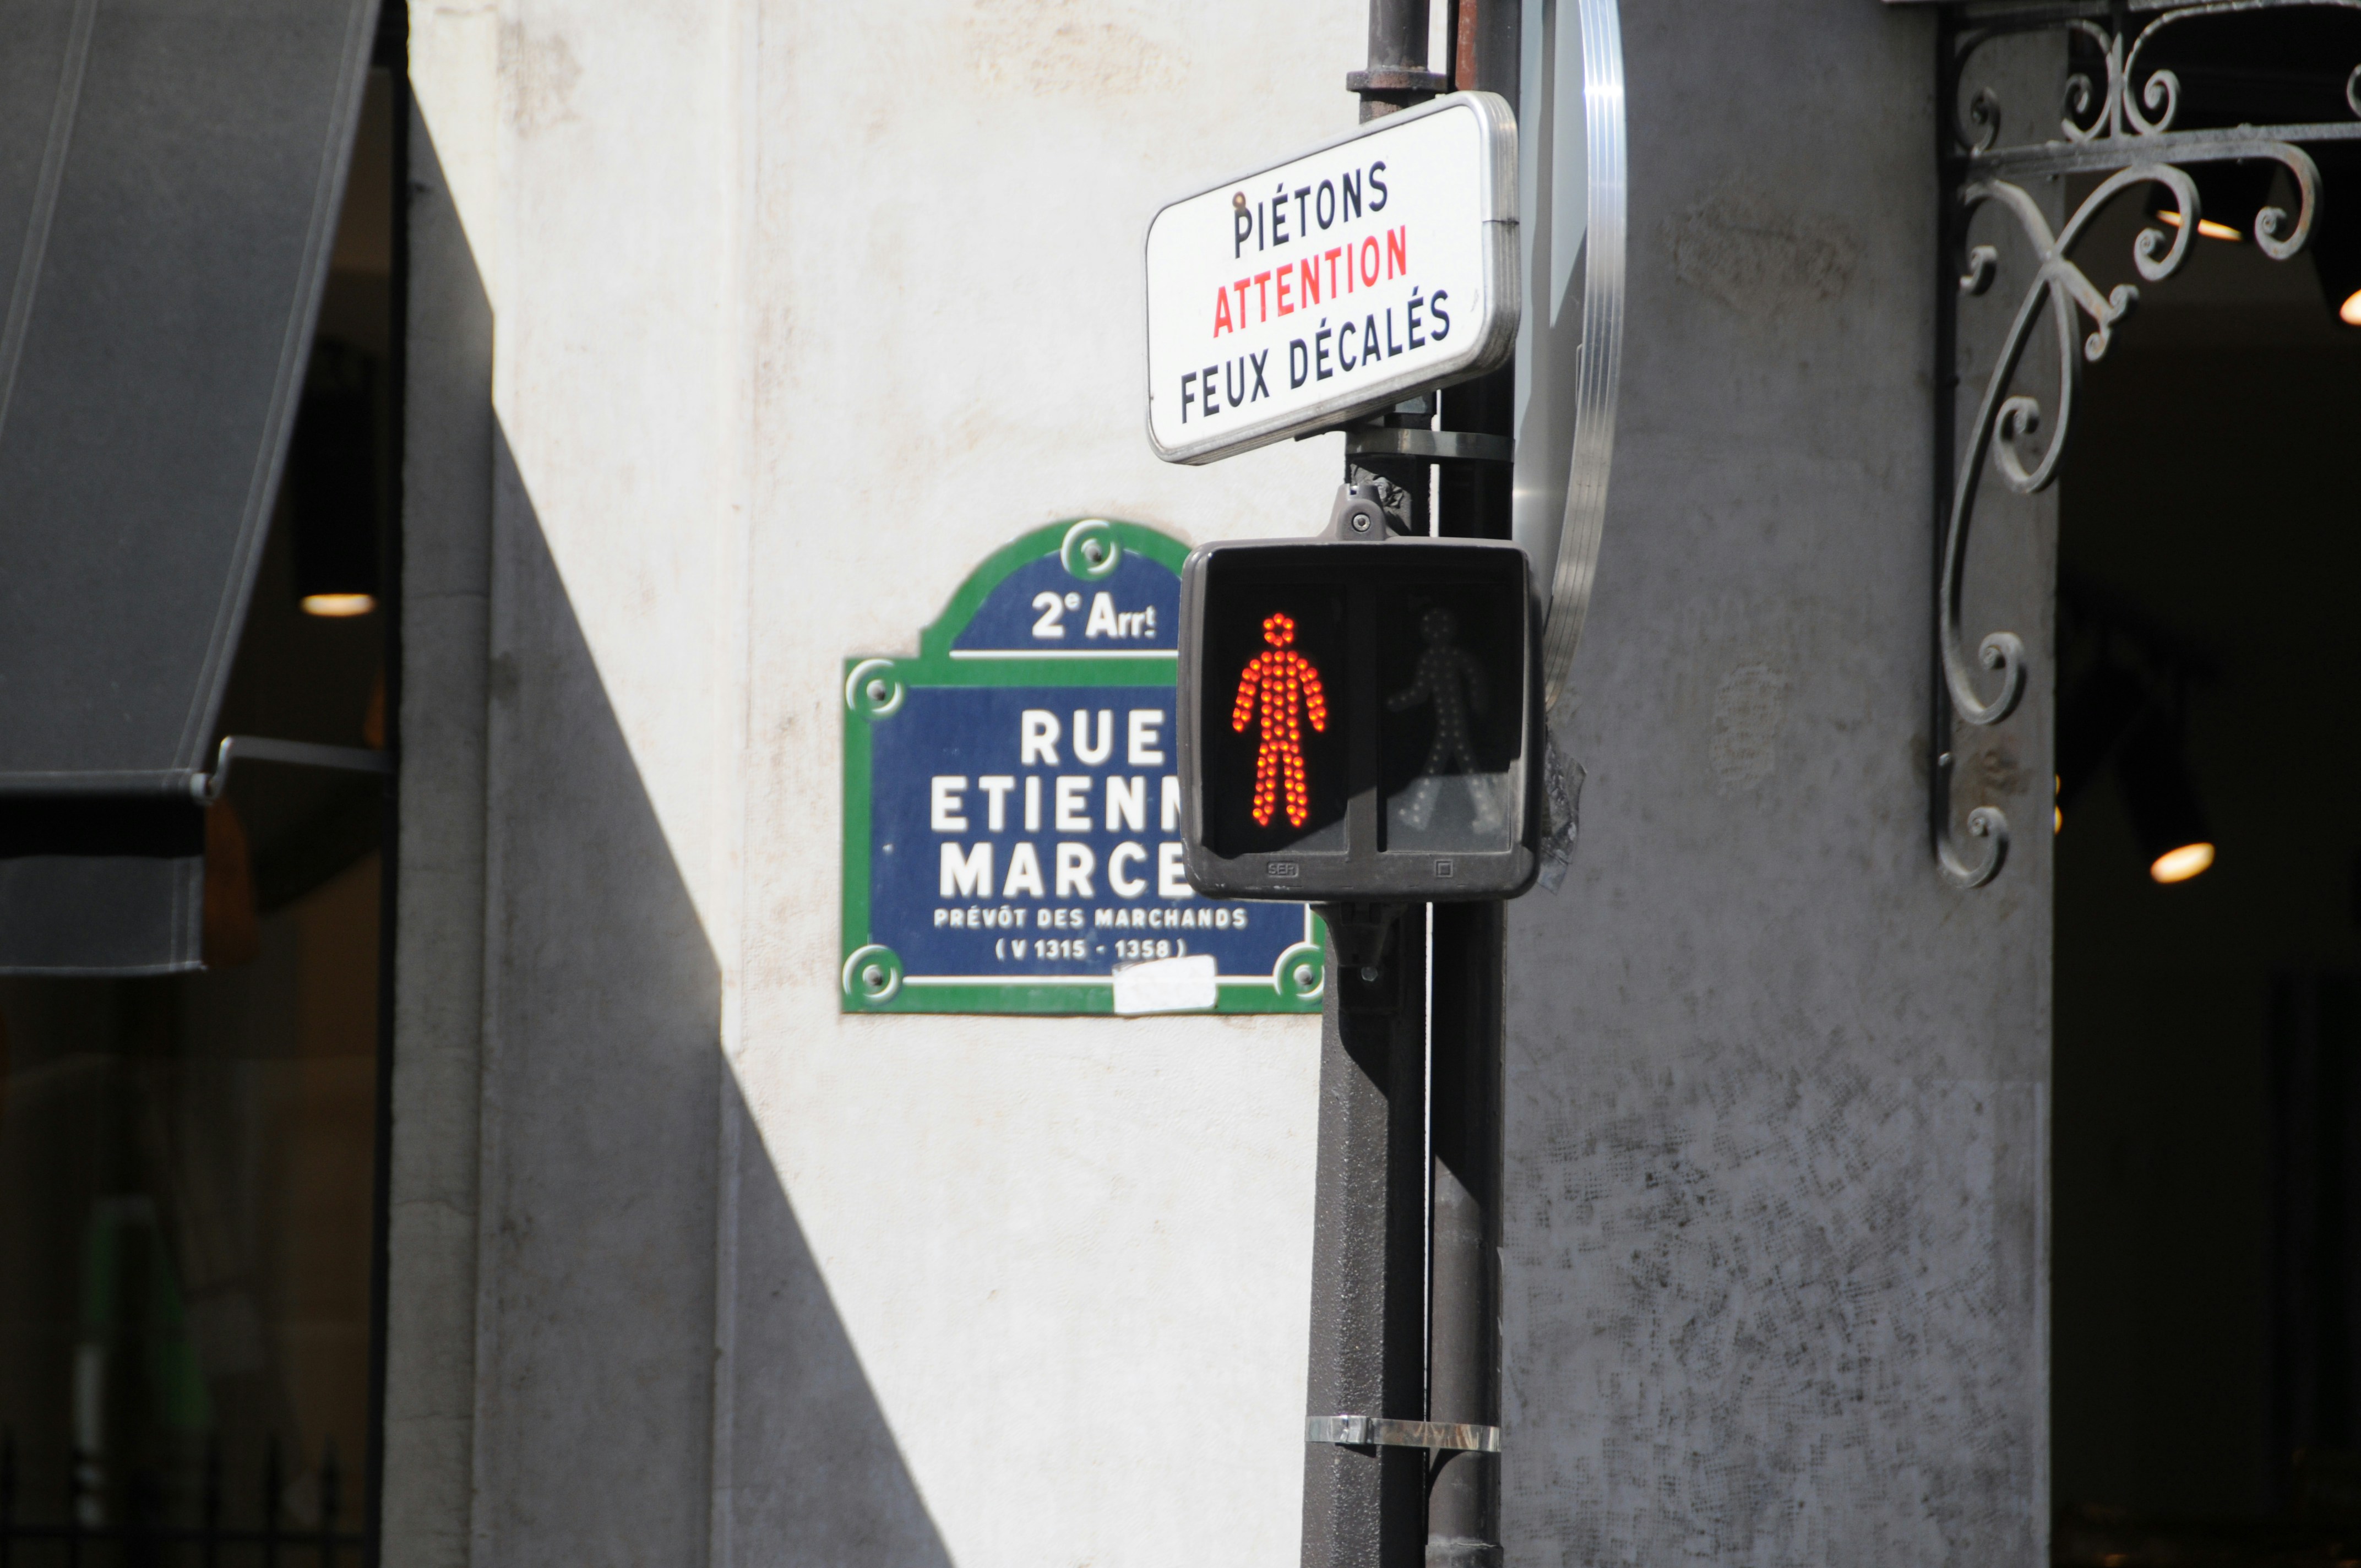 Crossing roads in Paris be like.